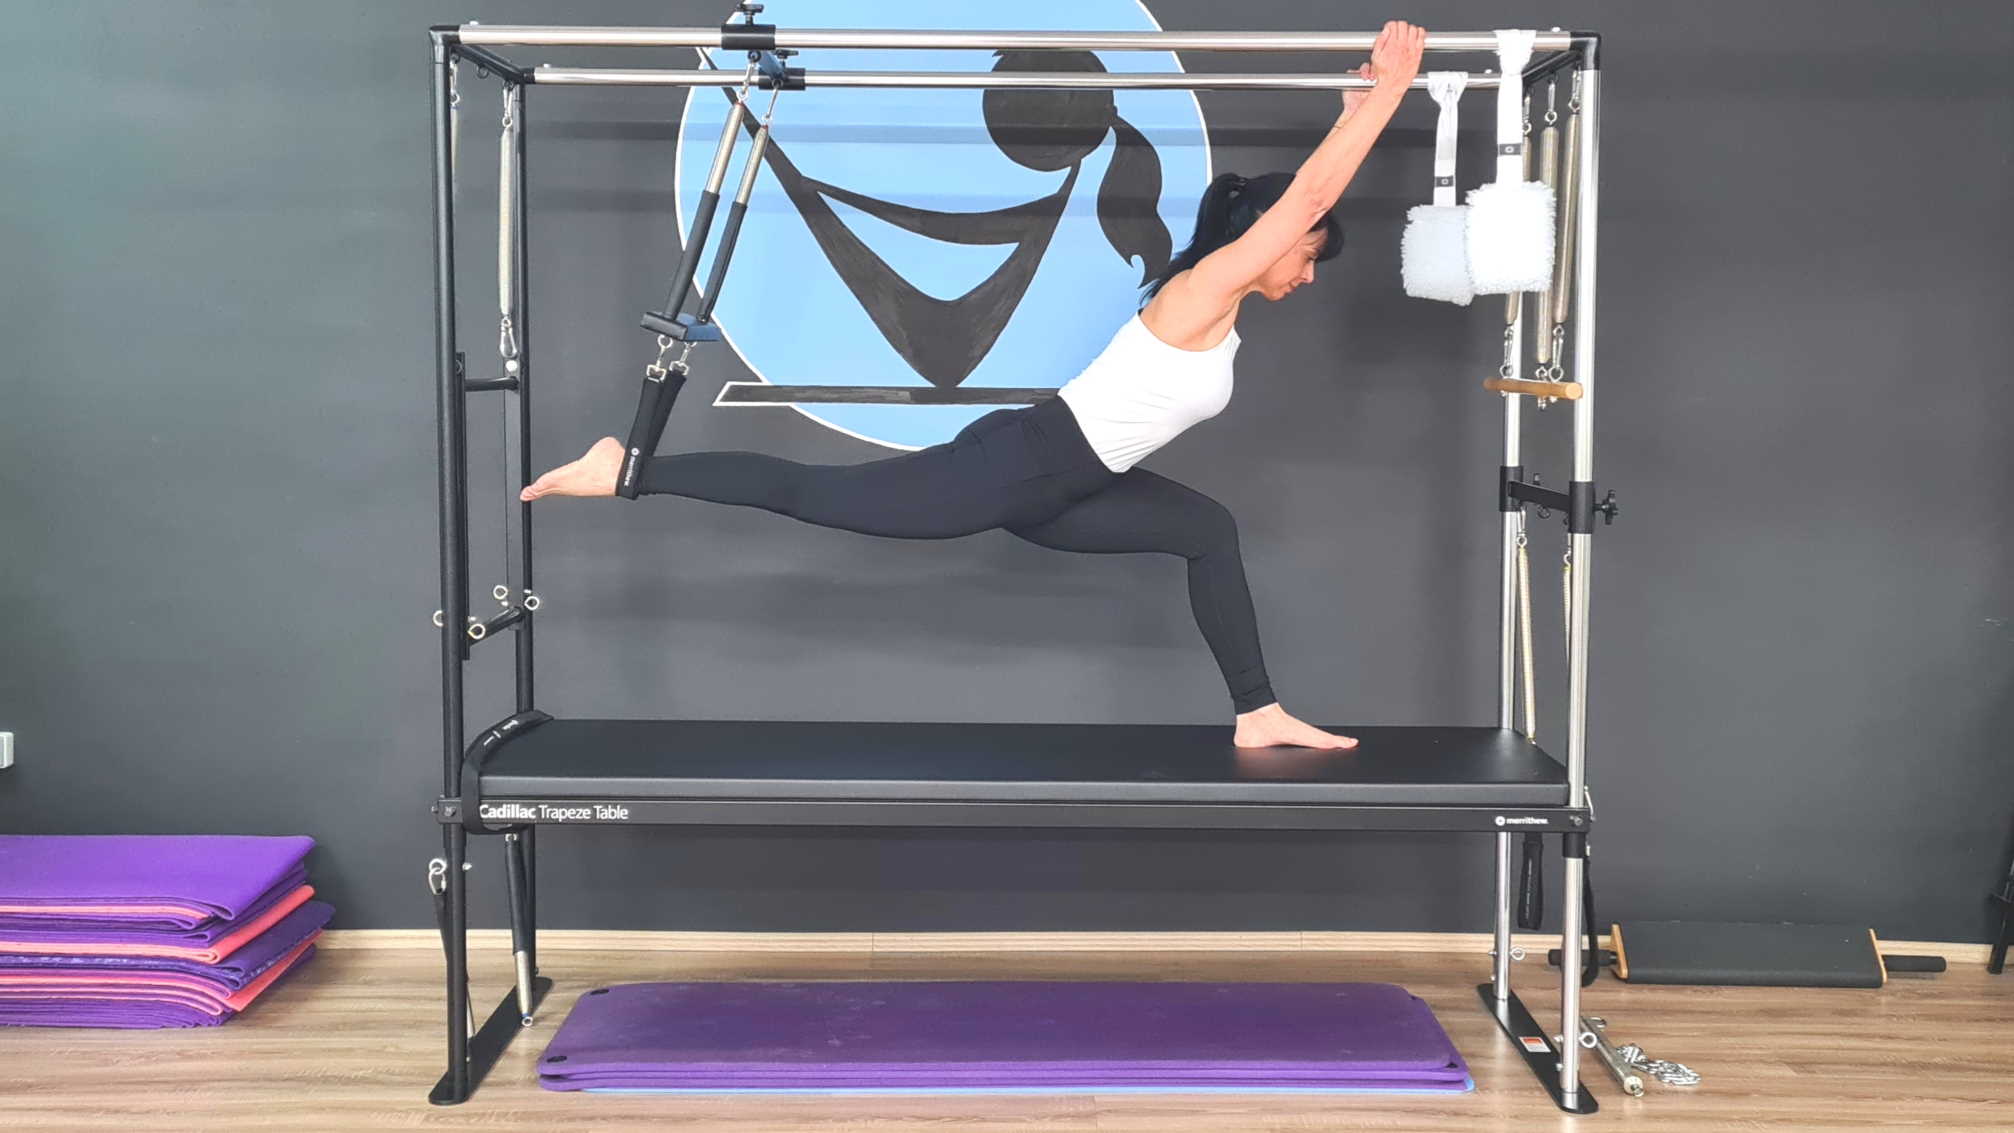 Pilatesom do zdravlja: Stretching